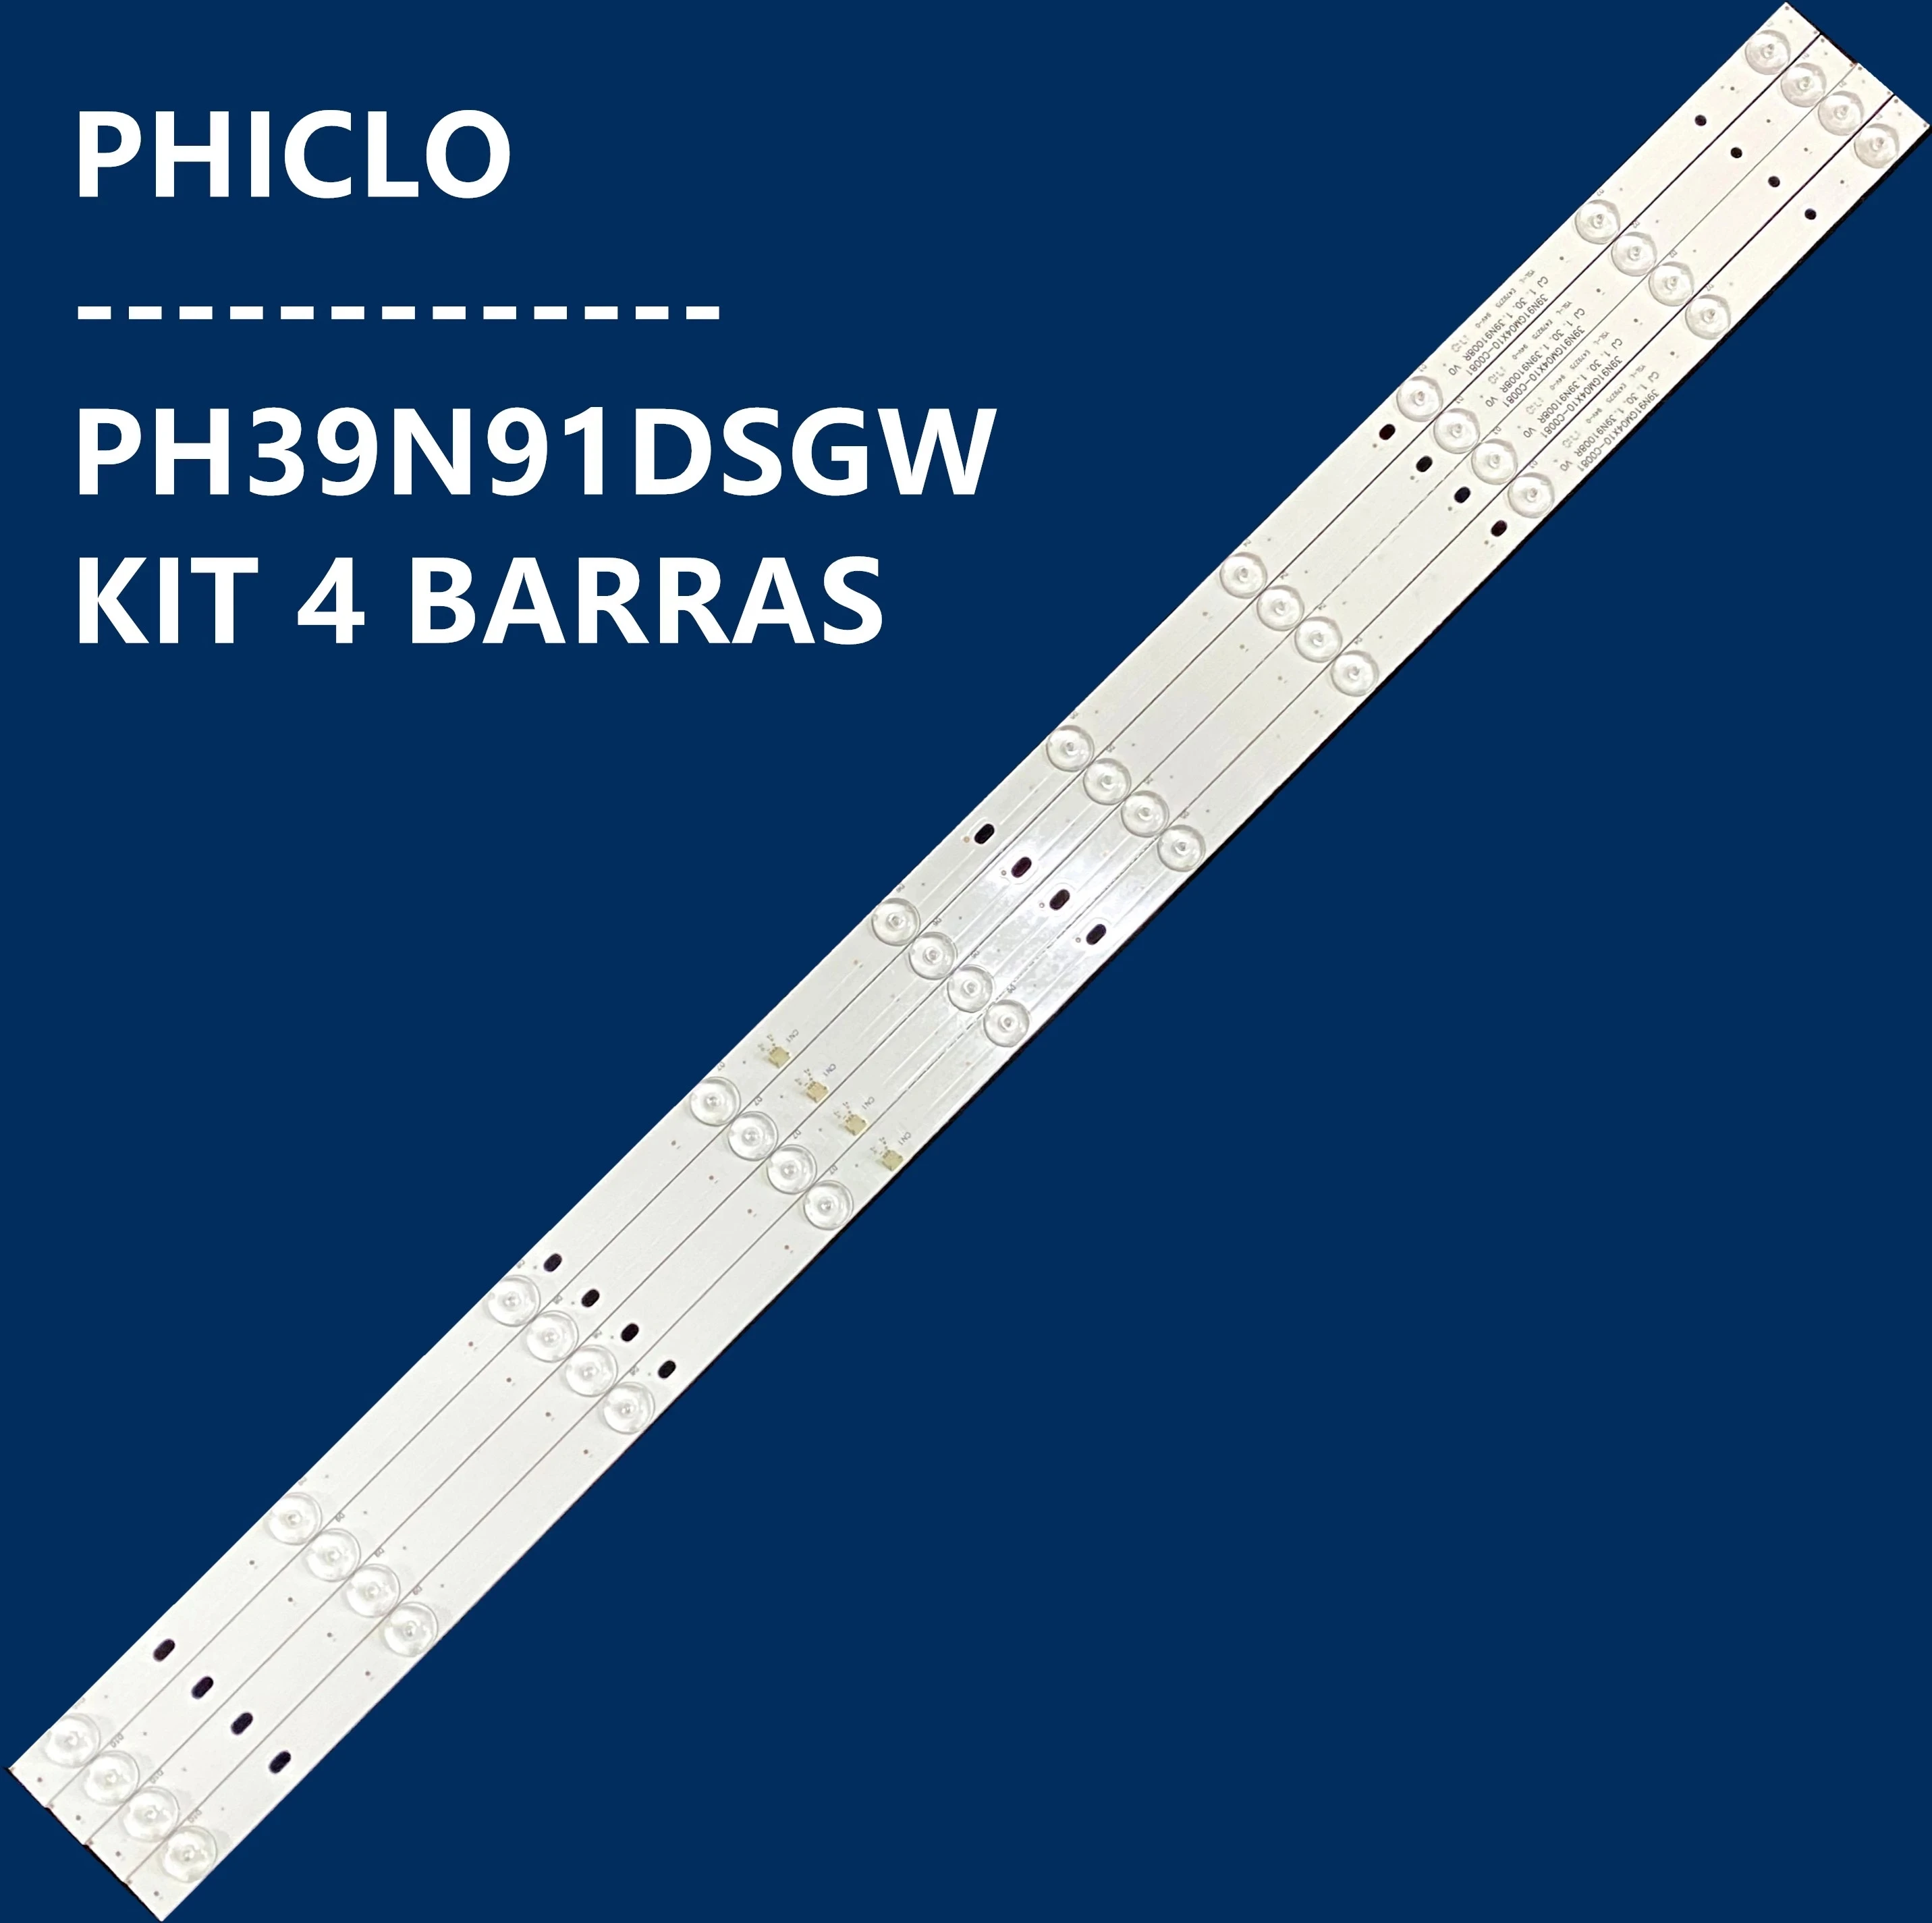 

20PCS LED Backlight strip For 39N91GM04X10-C0081 CJ 1.30.1.39N91008R V0 ph39n91dsgw Philco Ph39n91 Ph39n91dsgw L